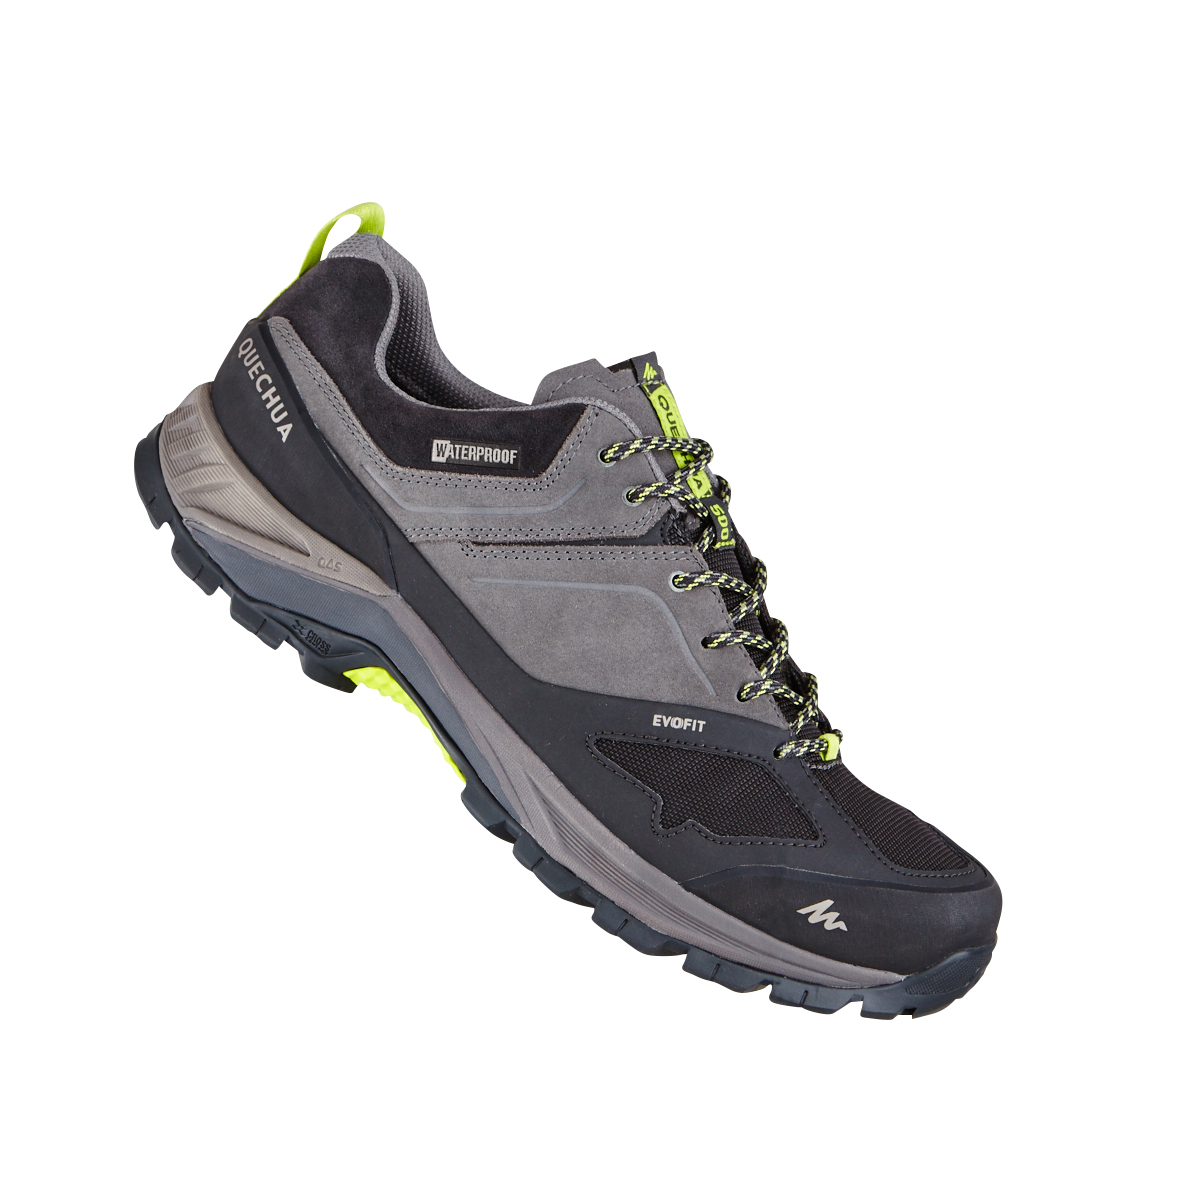 Men's waterproof mountain walking shoes 